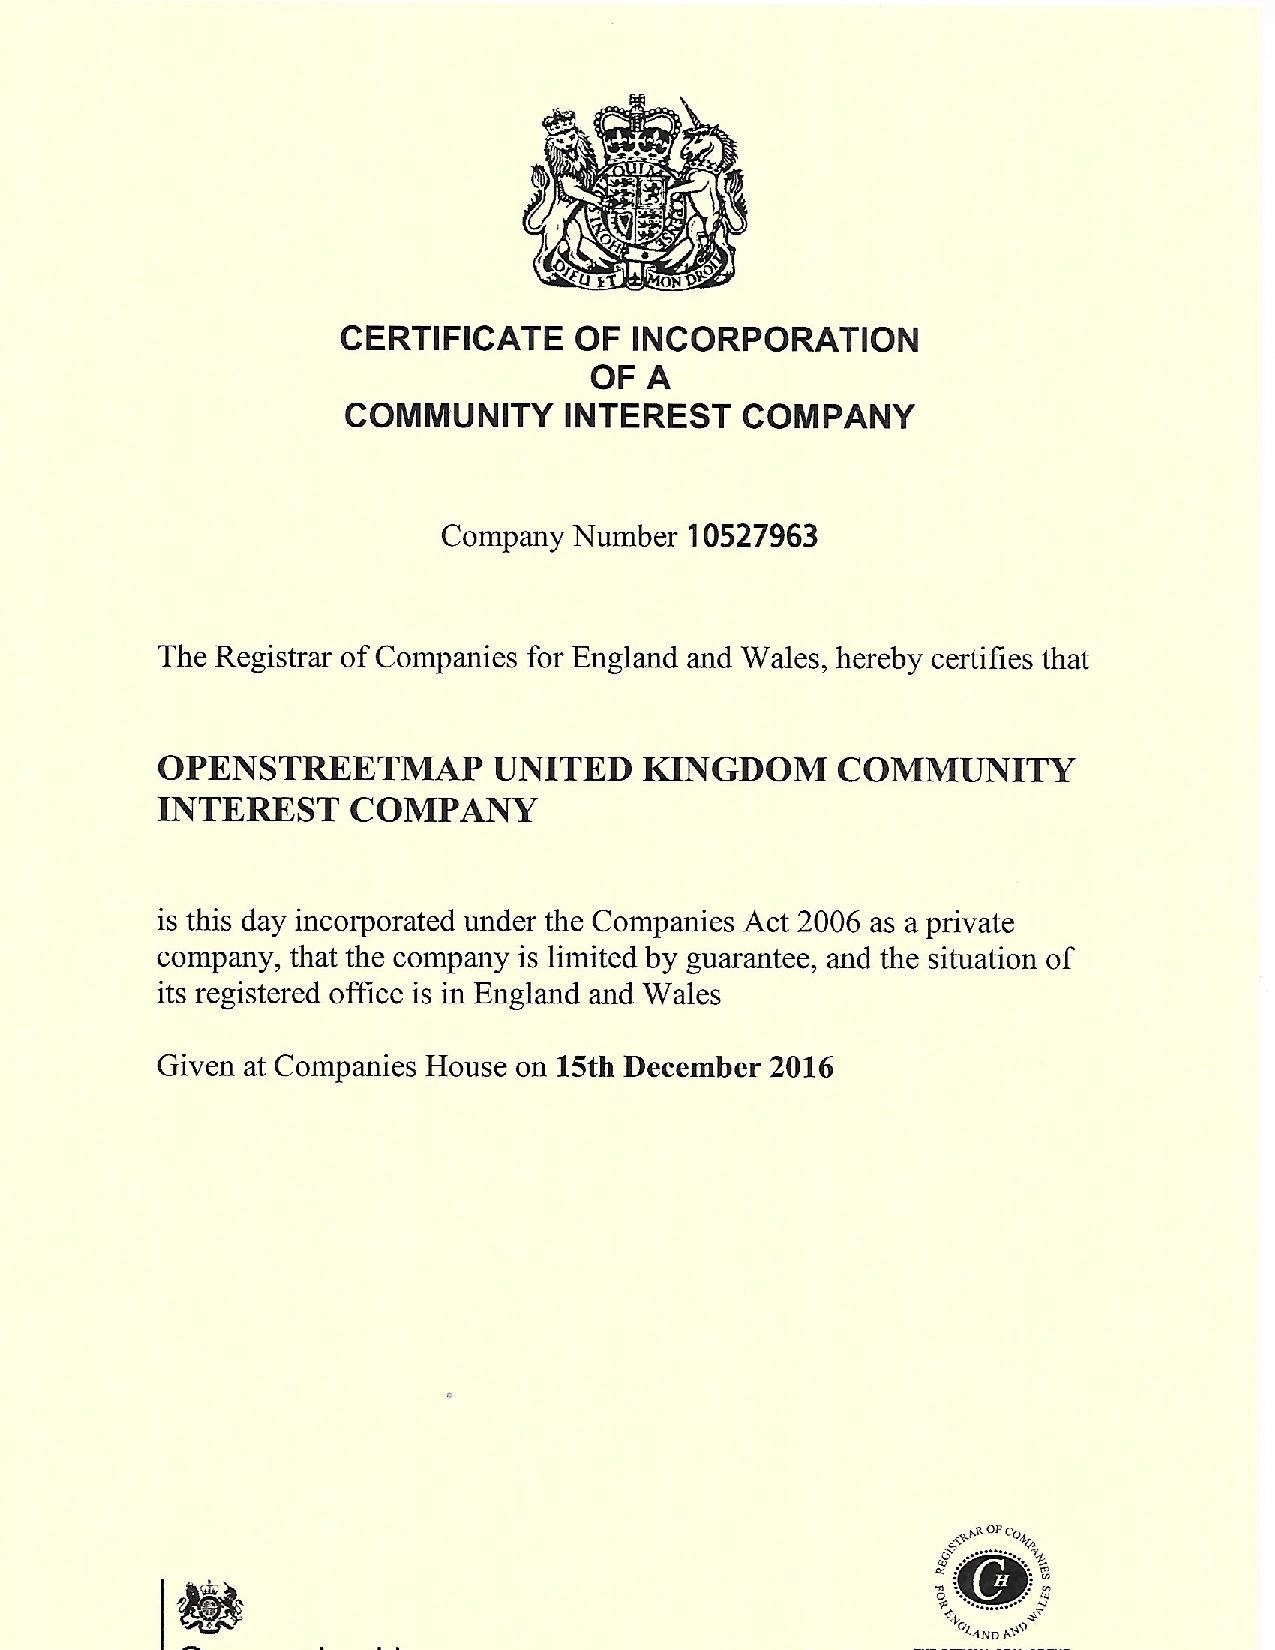 OSM-UK Certificate of Incorporation.pdf